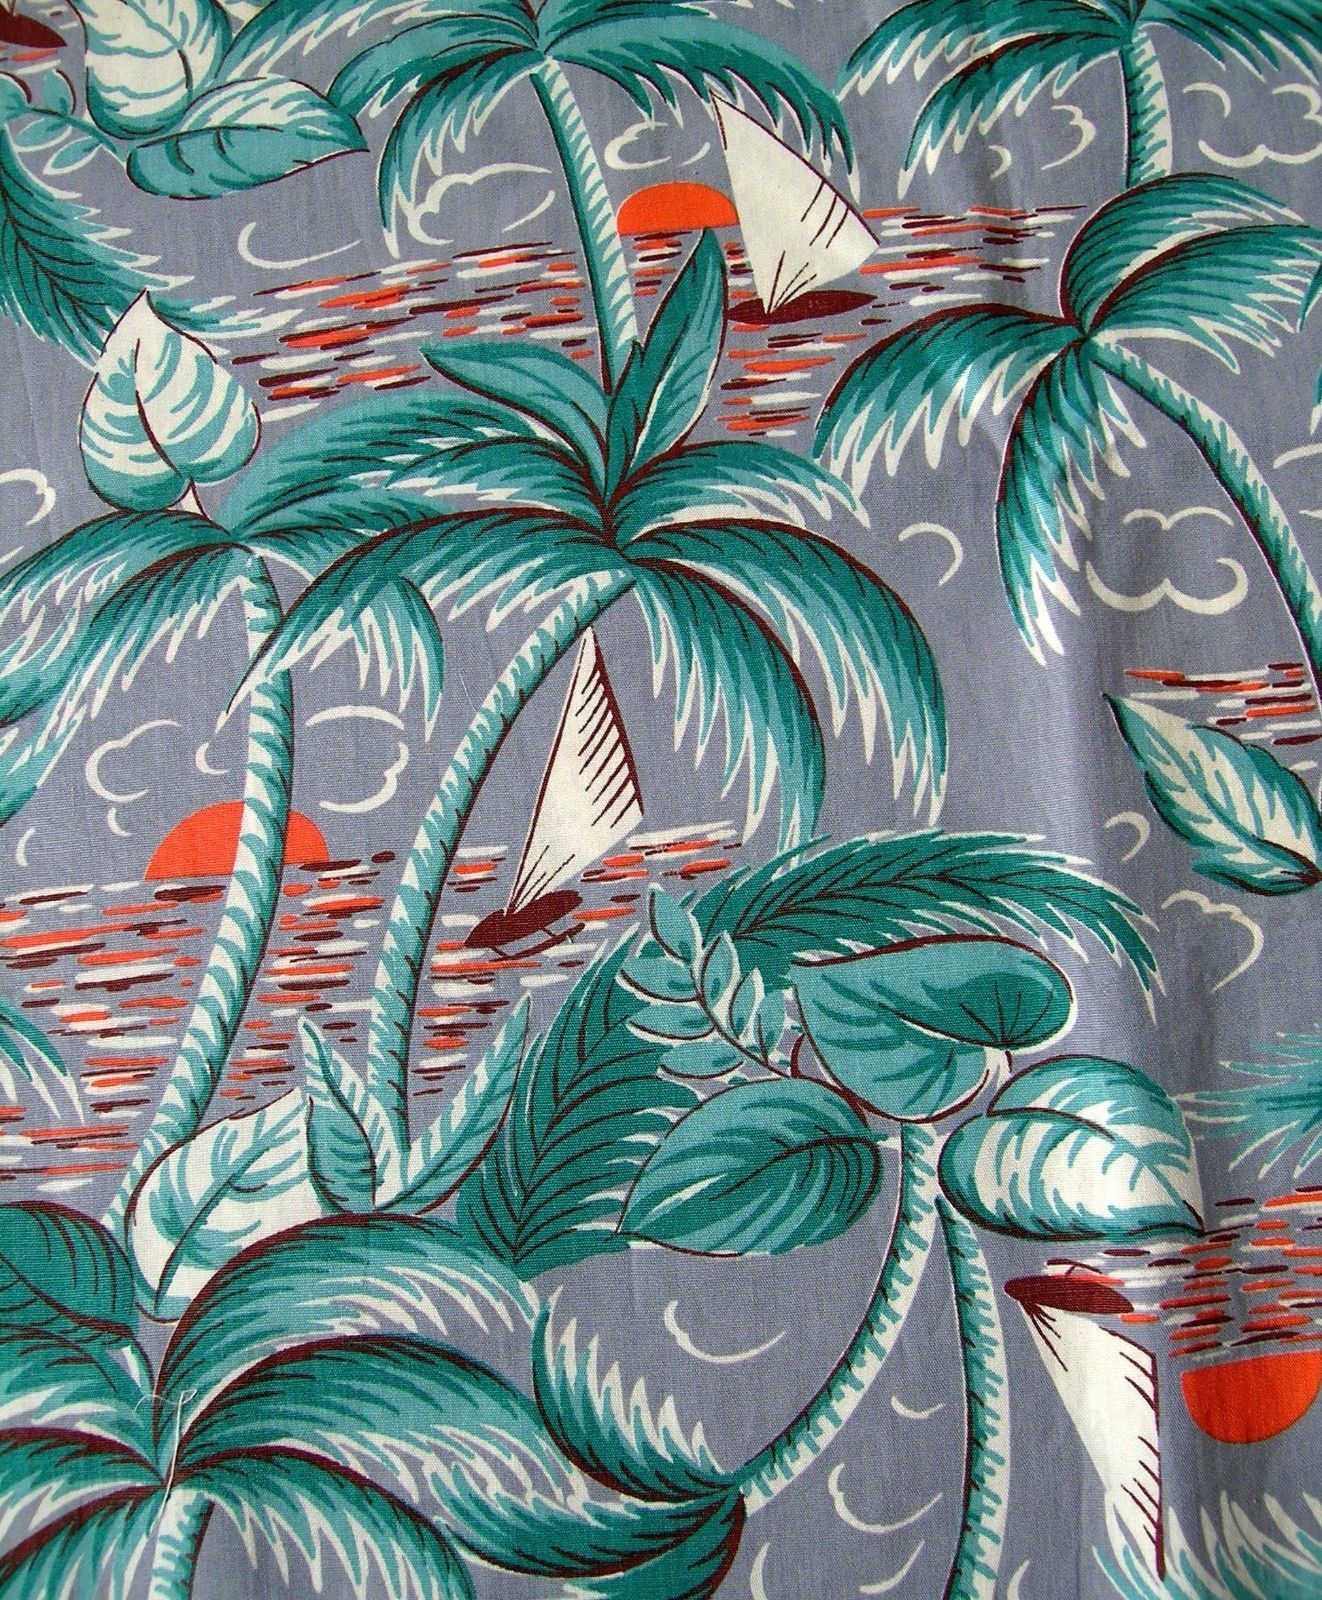 Vintage Original 1950's Printed Cotton Hawaiian Shirt Fabric Tropical Boat Palms. Print design art, Prints, Hawaiian fabric